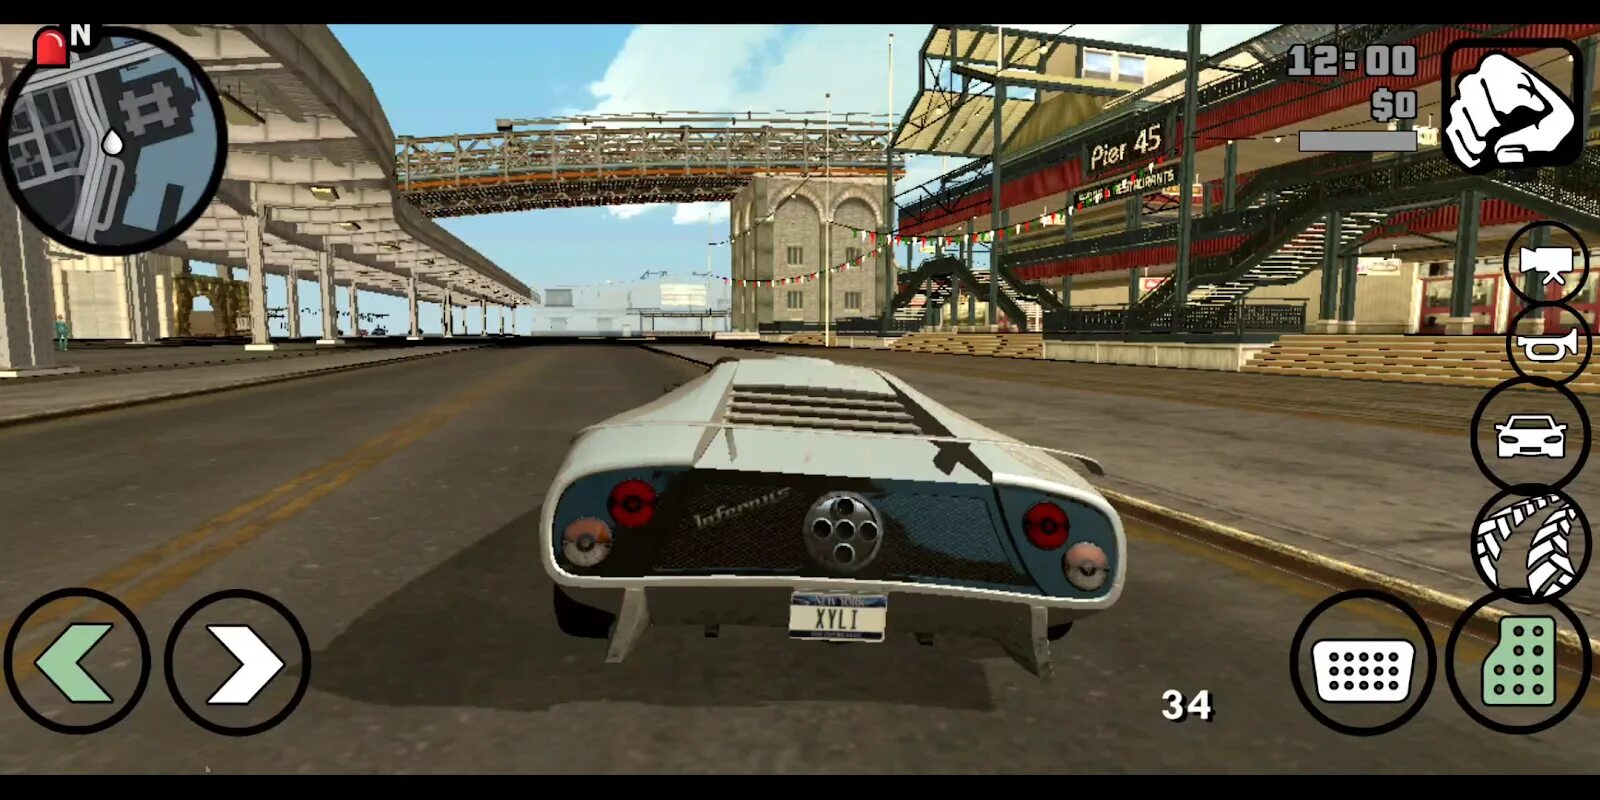 Grand Theft auto 4 Android. Grand Theft auto IV на андроид. GTA 4 mobile на андроид. Игры похожие на ГТА 4 на андроид. Gta iv mobile